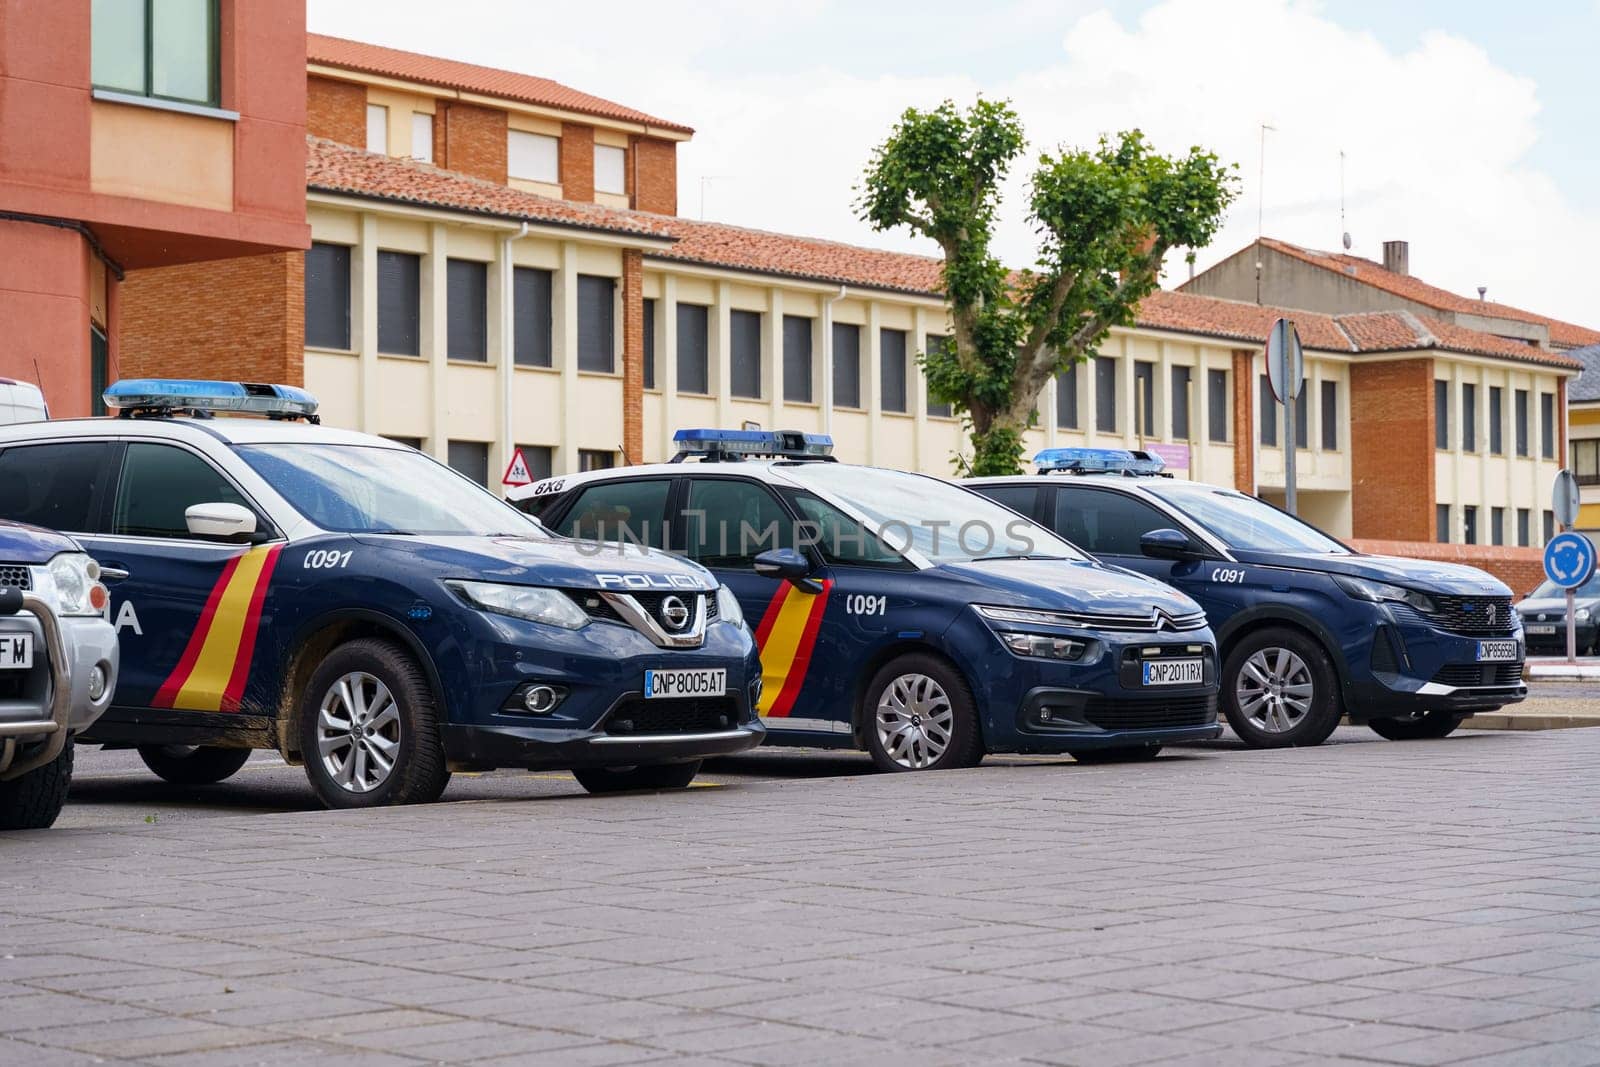 Astorga, Spain - June 4, 2023: Policia Nacional cars parked near the police station.